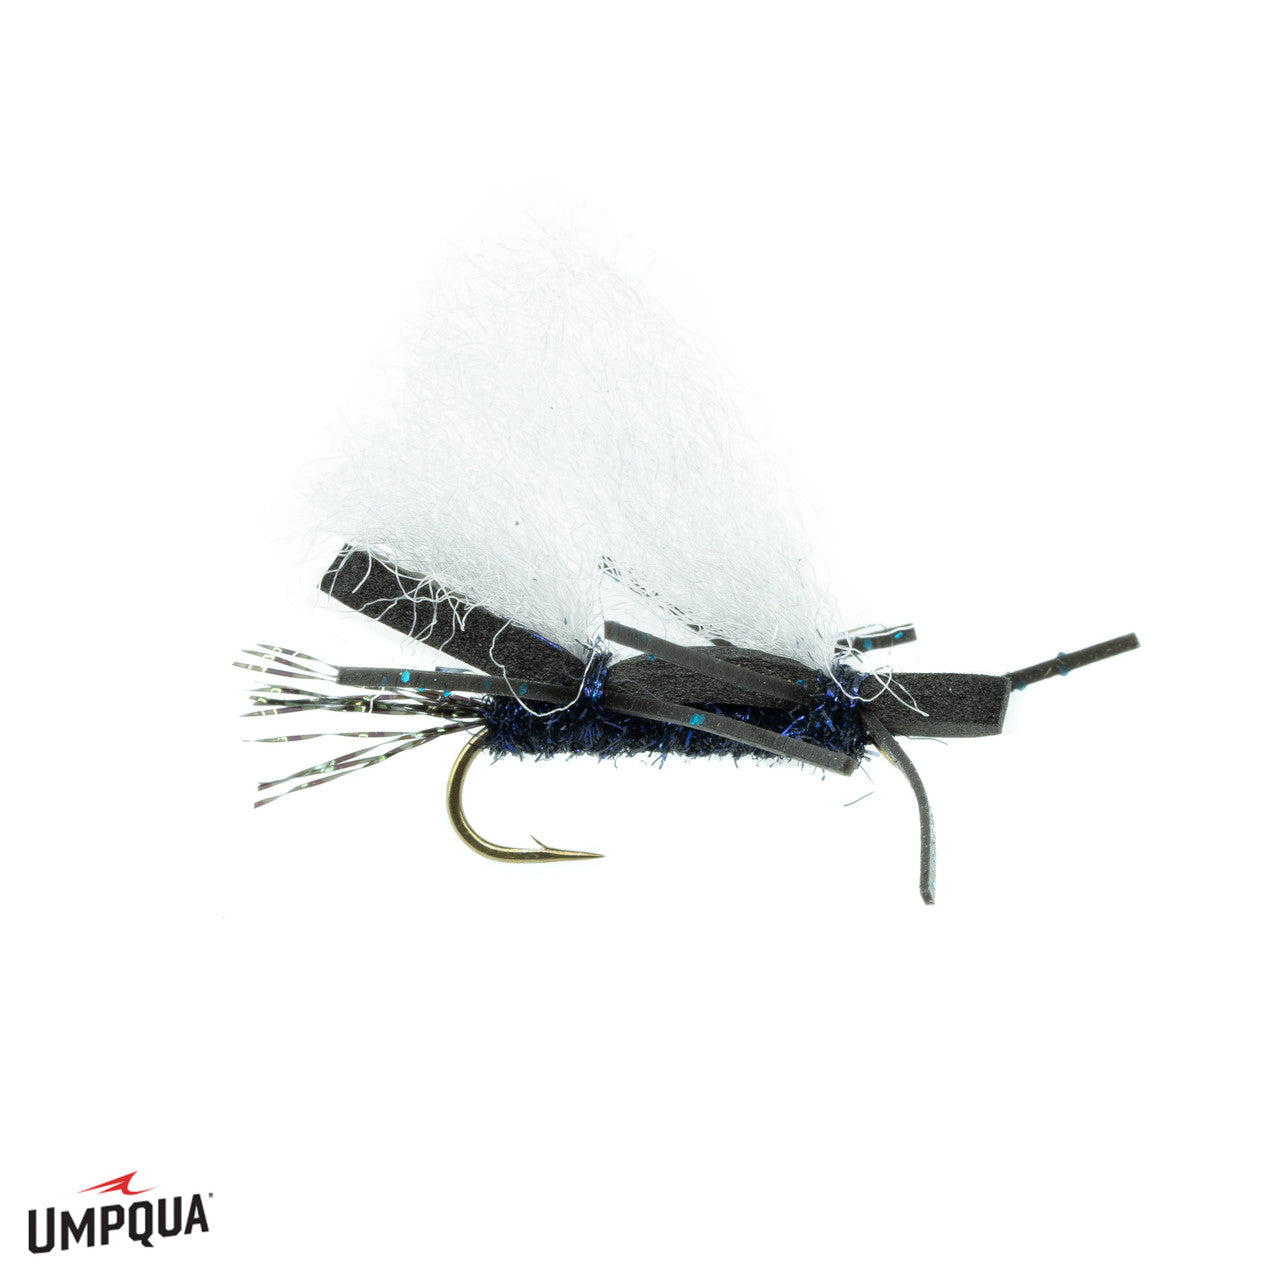 Chubby Chernoble - ( Umpqua) - Blue Quill Angler